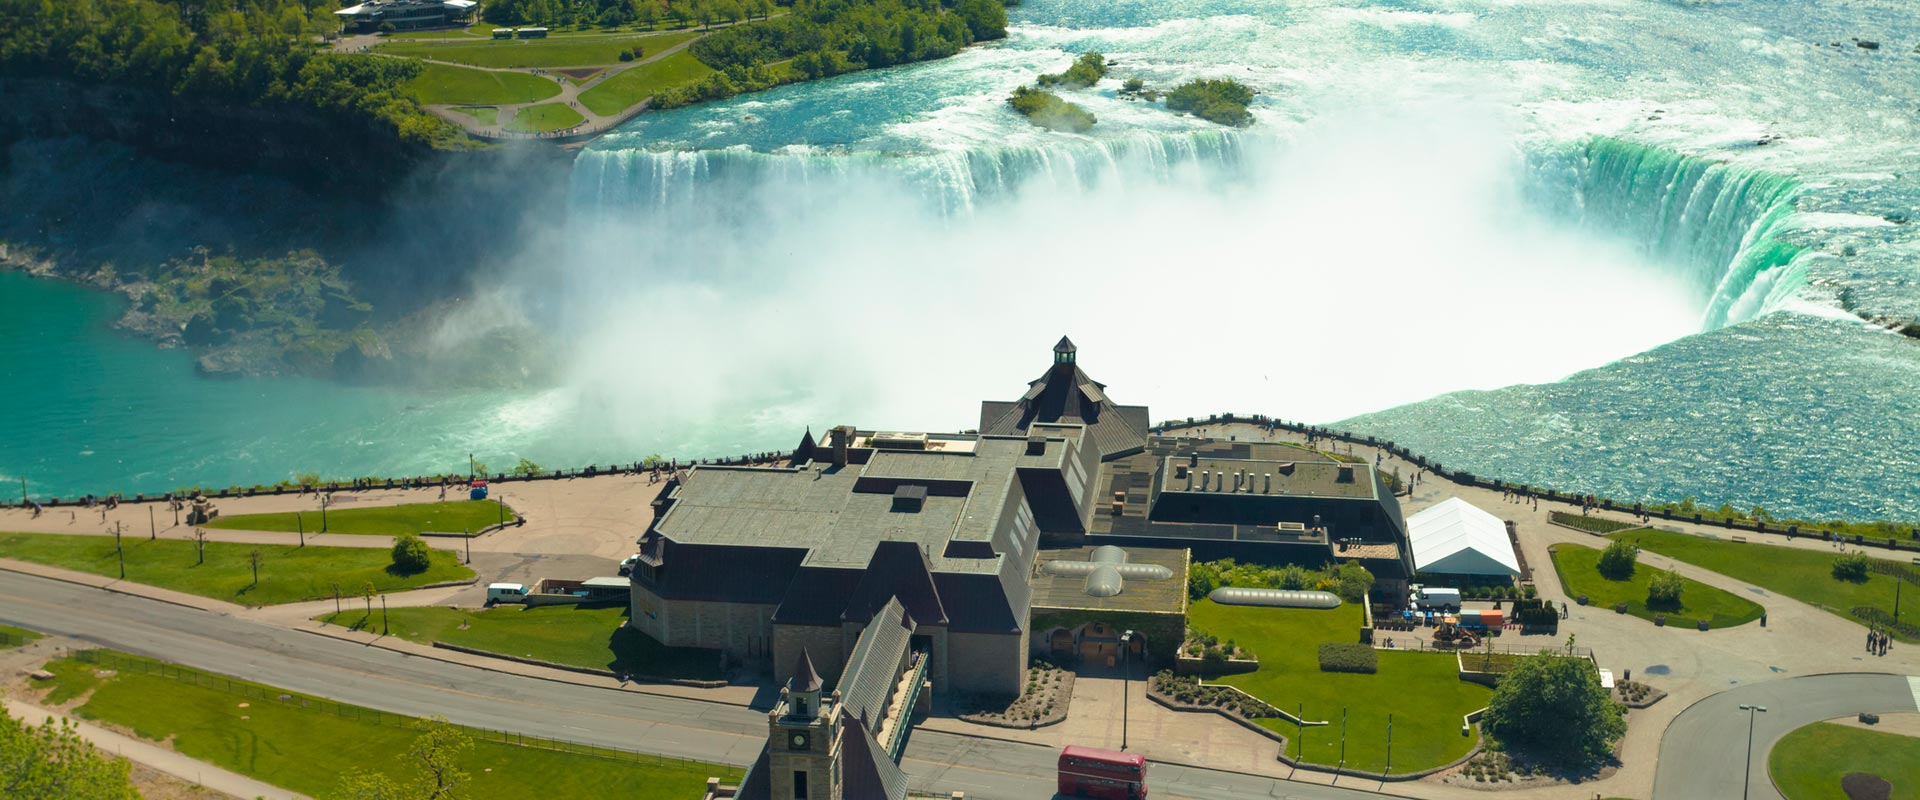 Niagara USA Attractions – A Helicopter Ride to see Niagara Falls